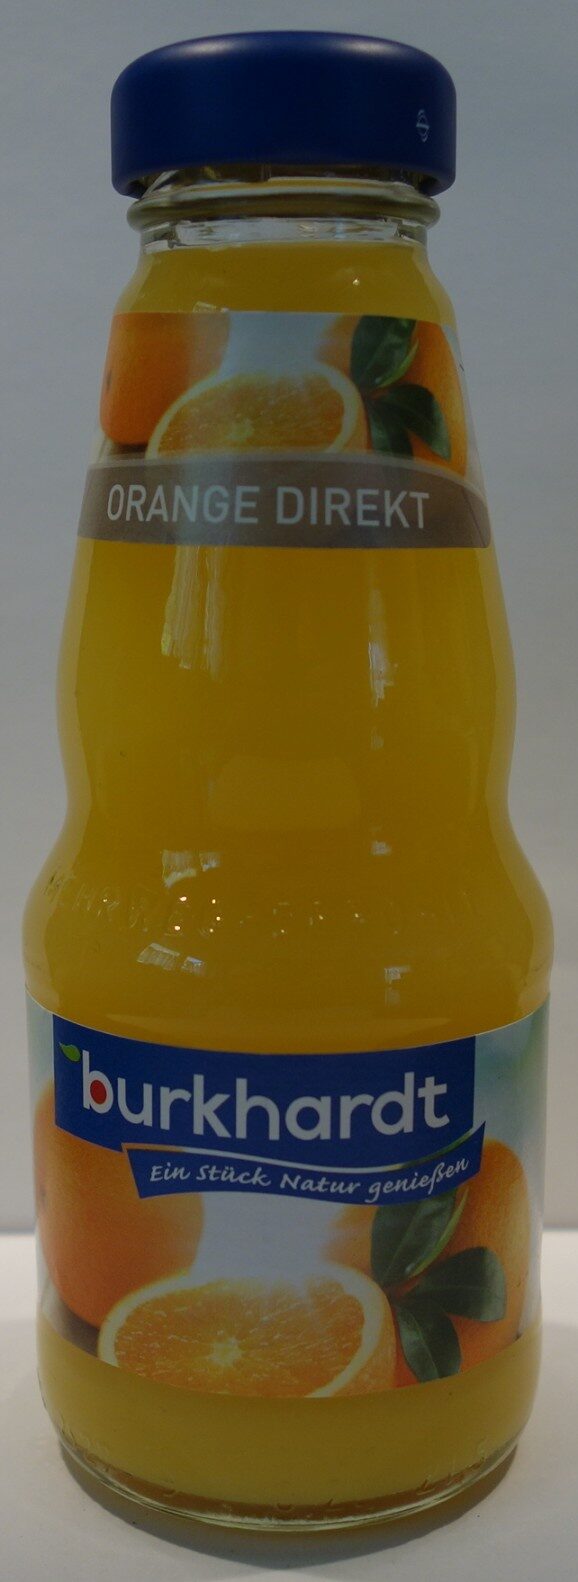 Orange Direkt - Product - de